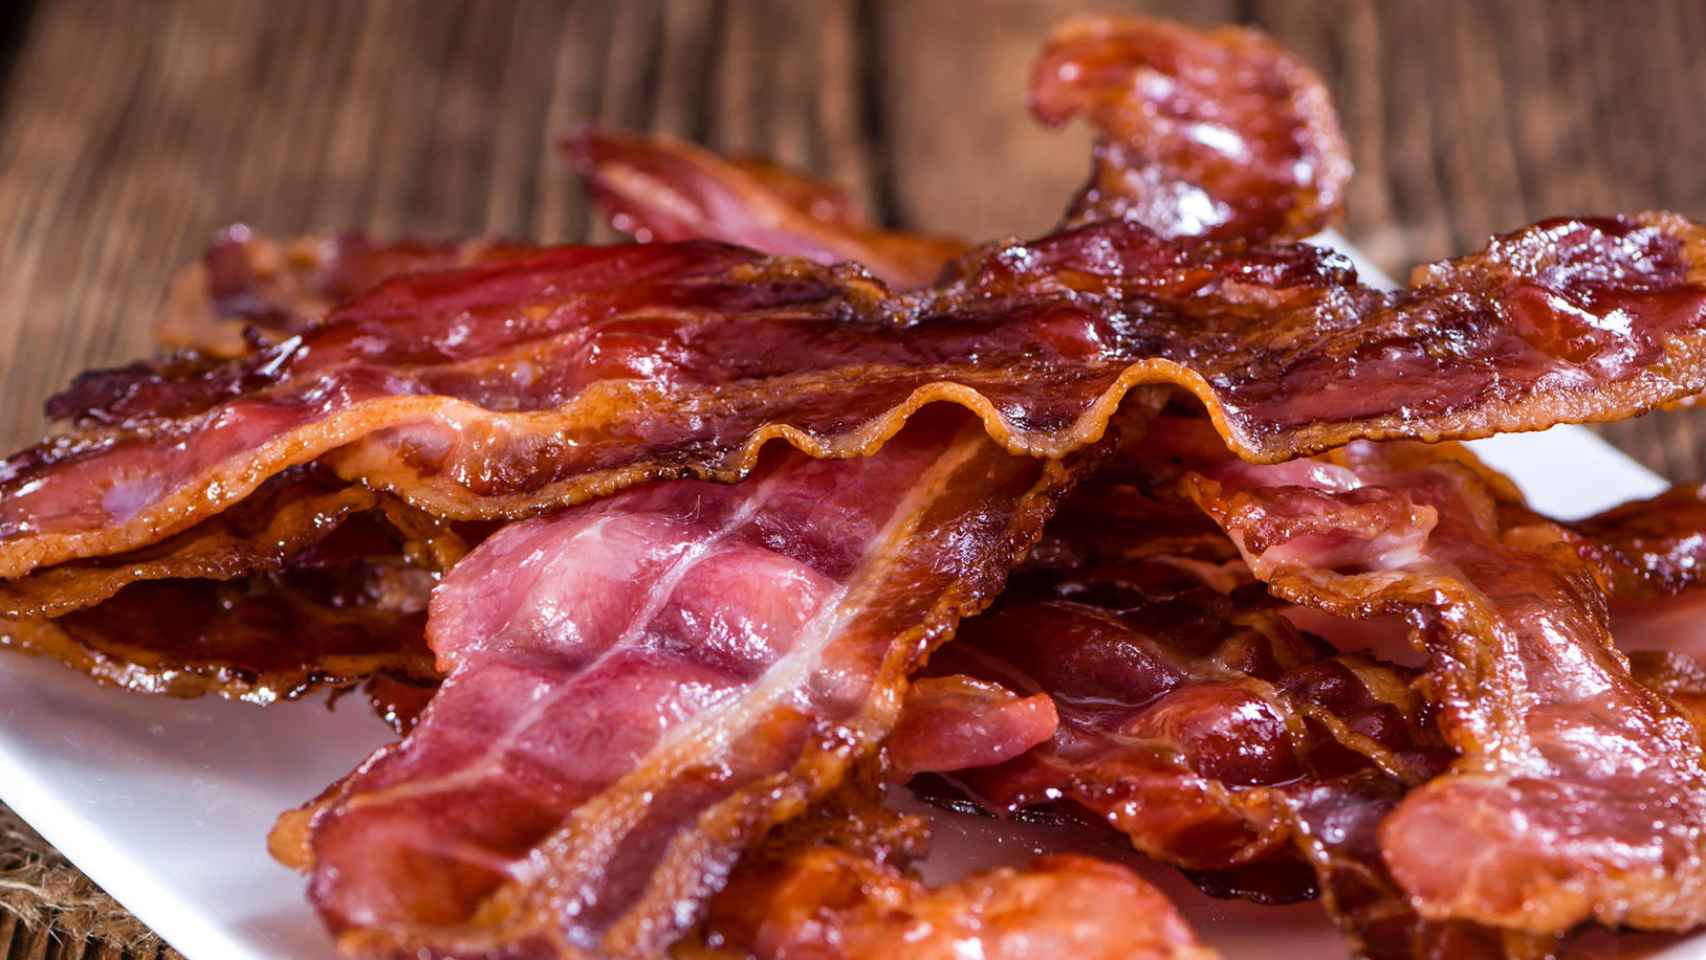 Plato de bacon.